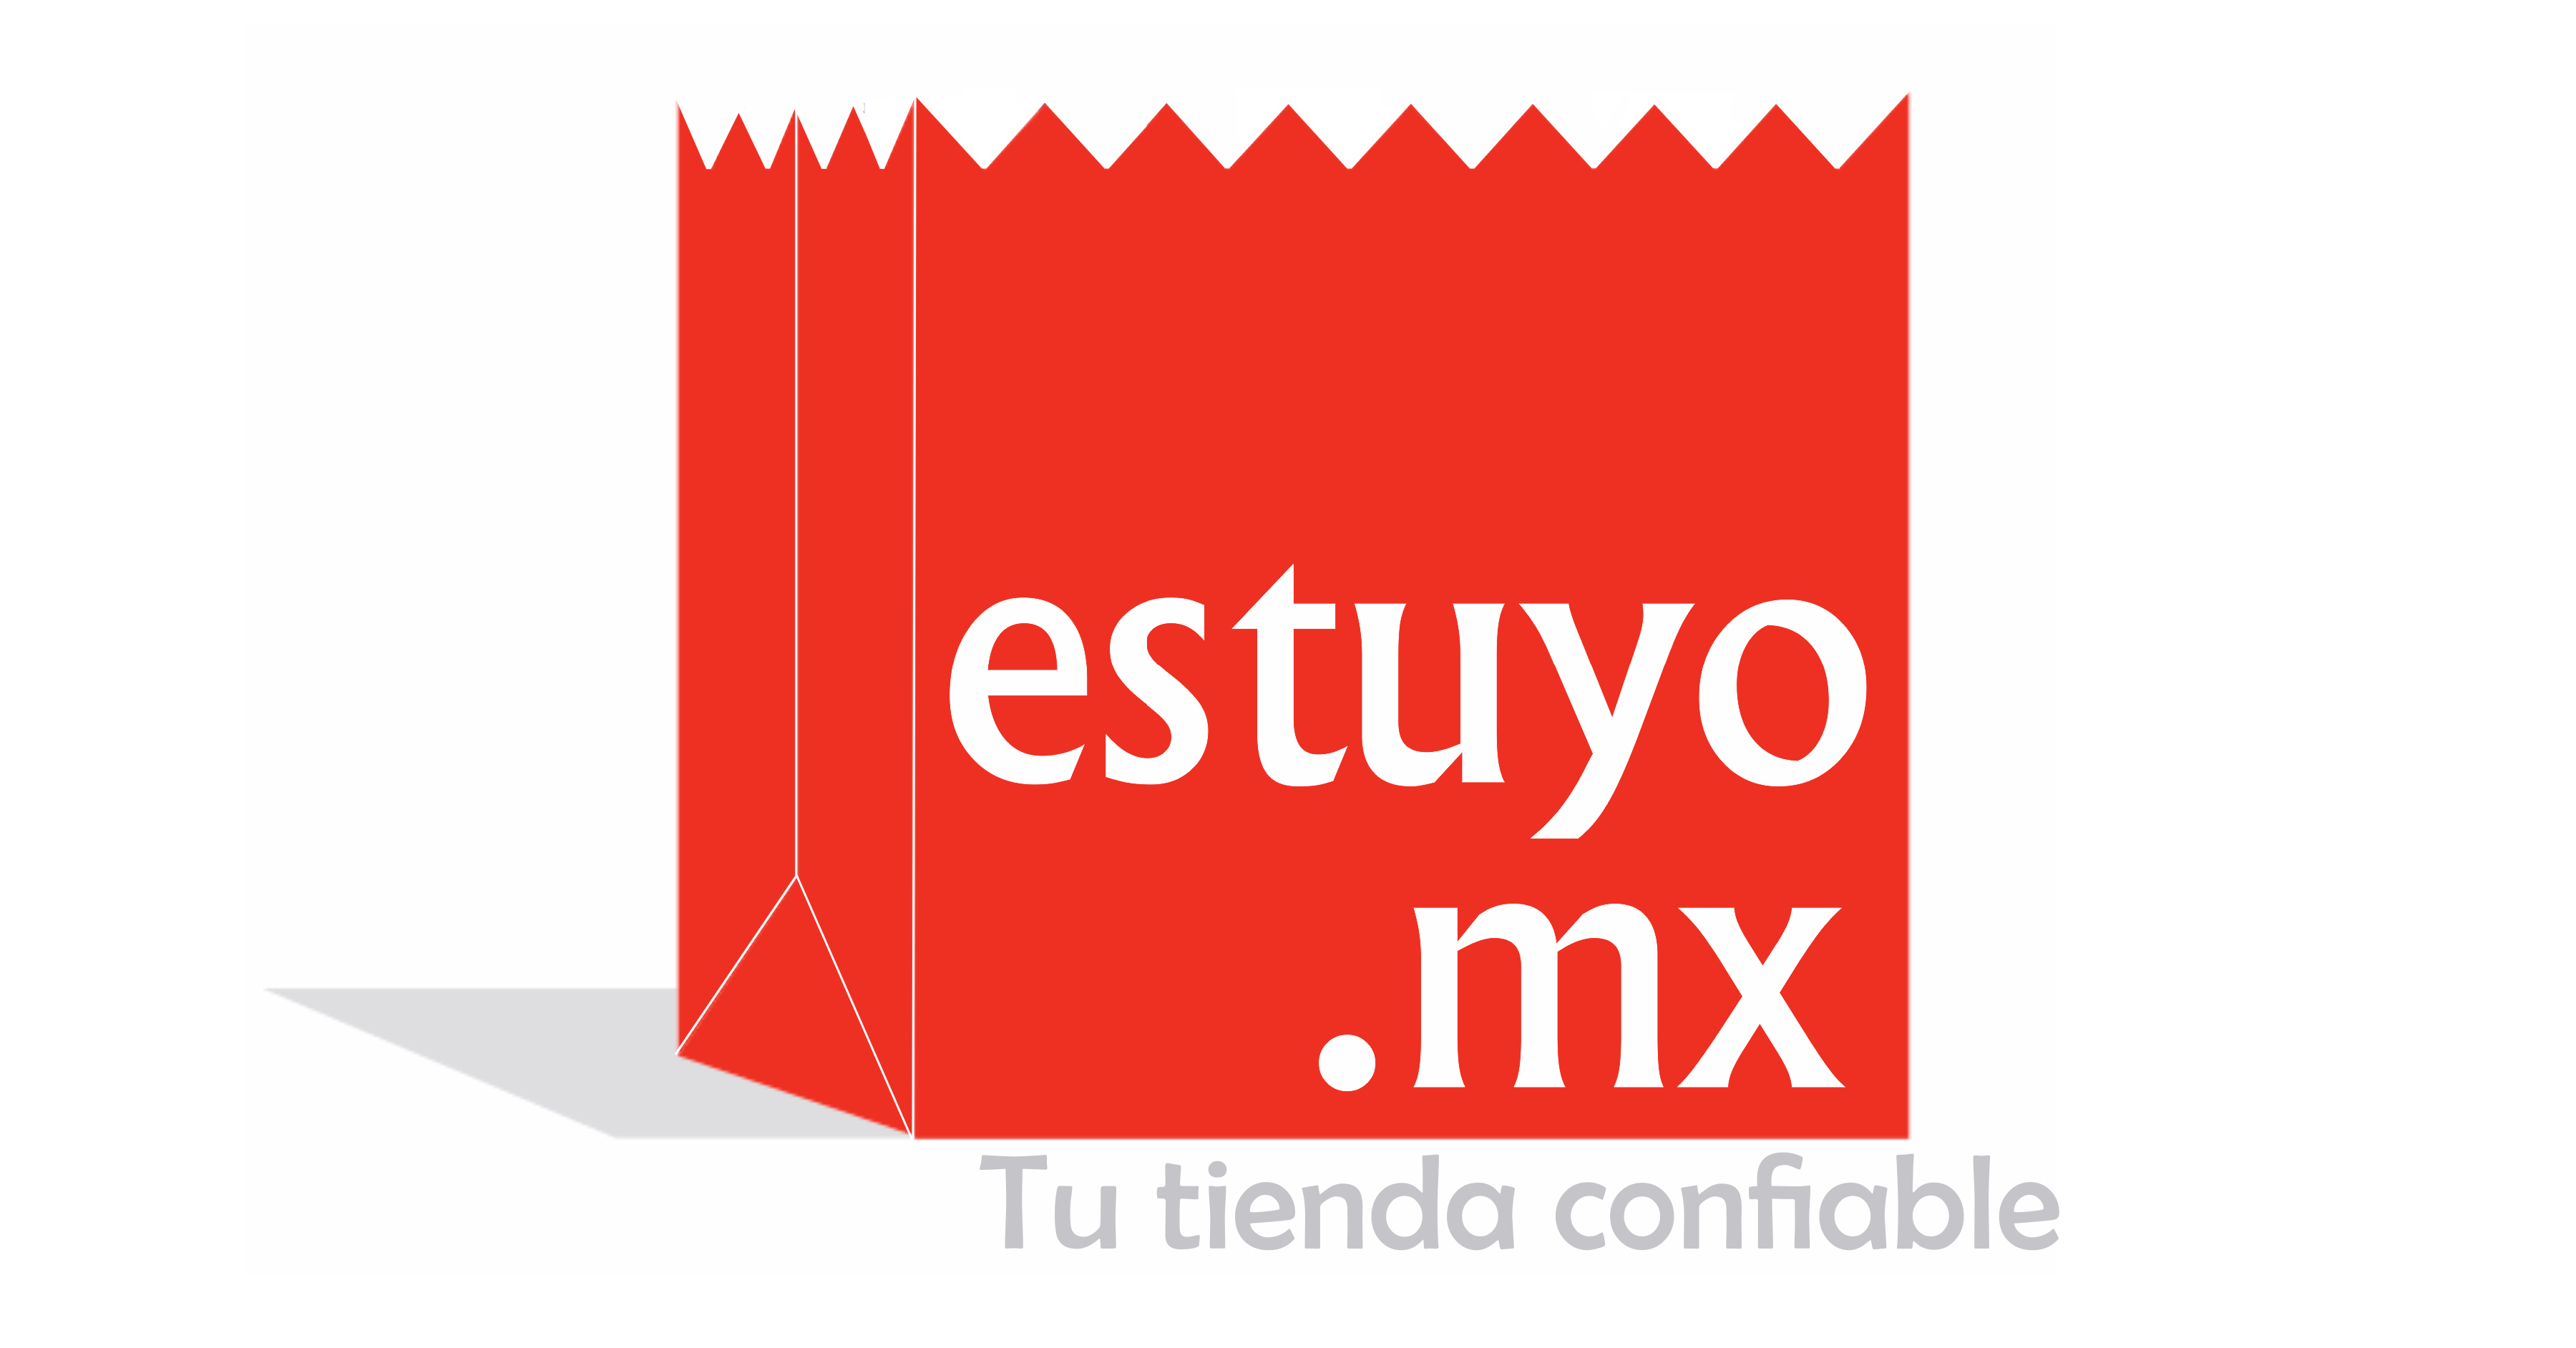 estuyo.mx – EstuyoMx